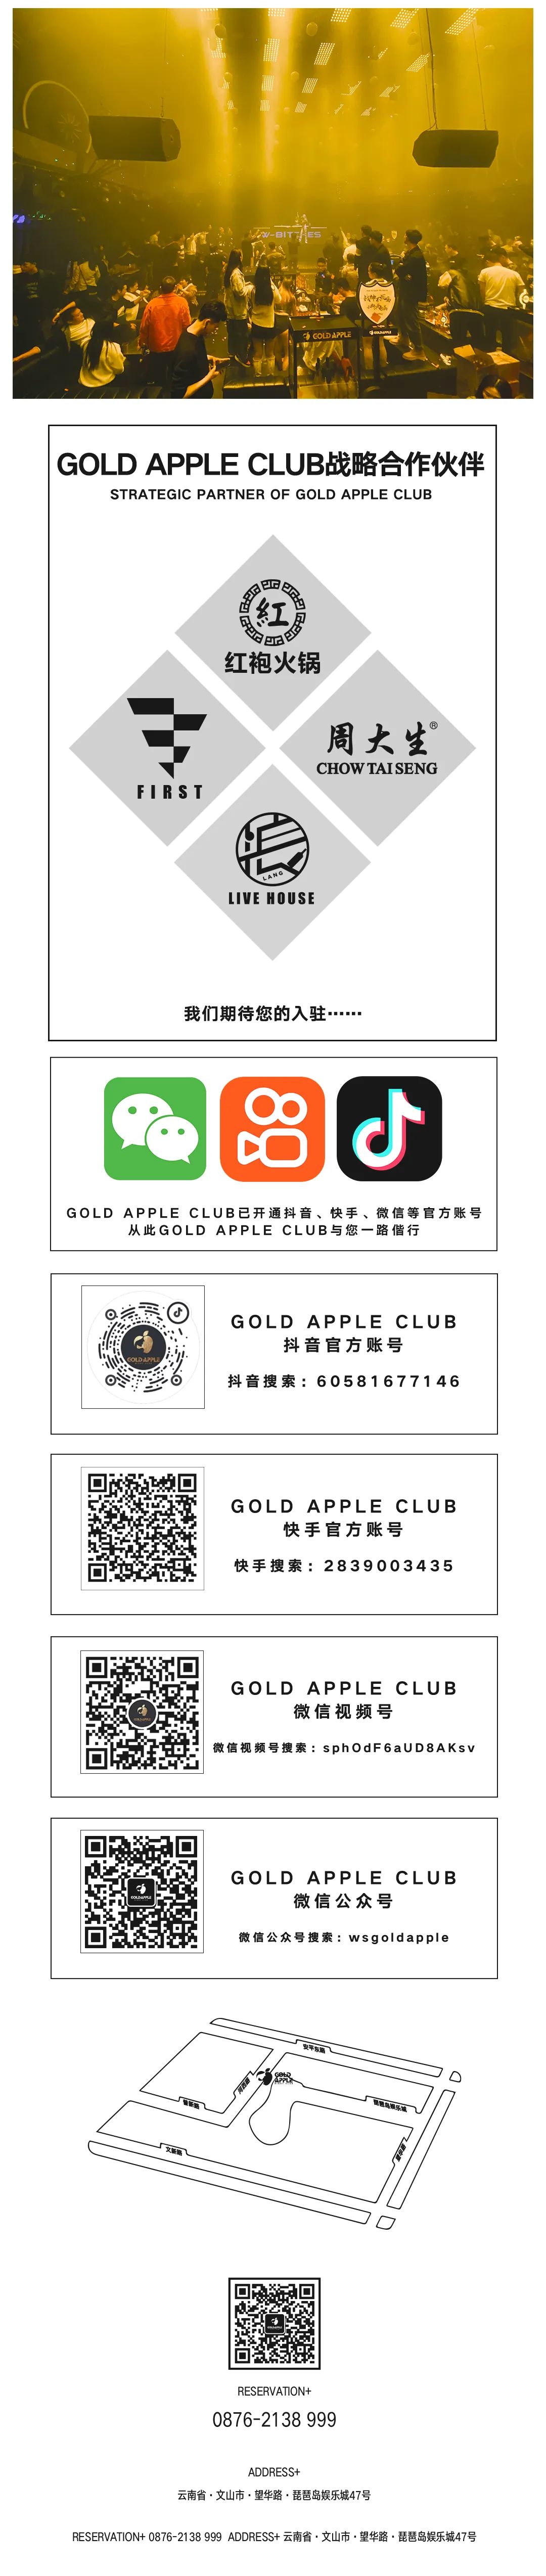 GOLD APPLE CLUB丨W-BITCHES#精彩回顾 让狂热的音乐吵醒所有人！-文山金苹果酒吧/GOLD APPLE CLUB